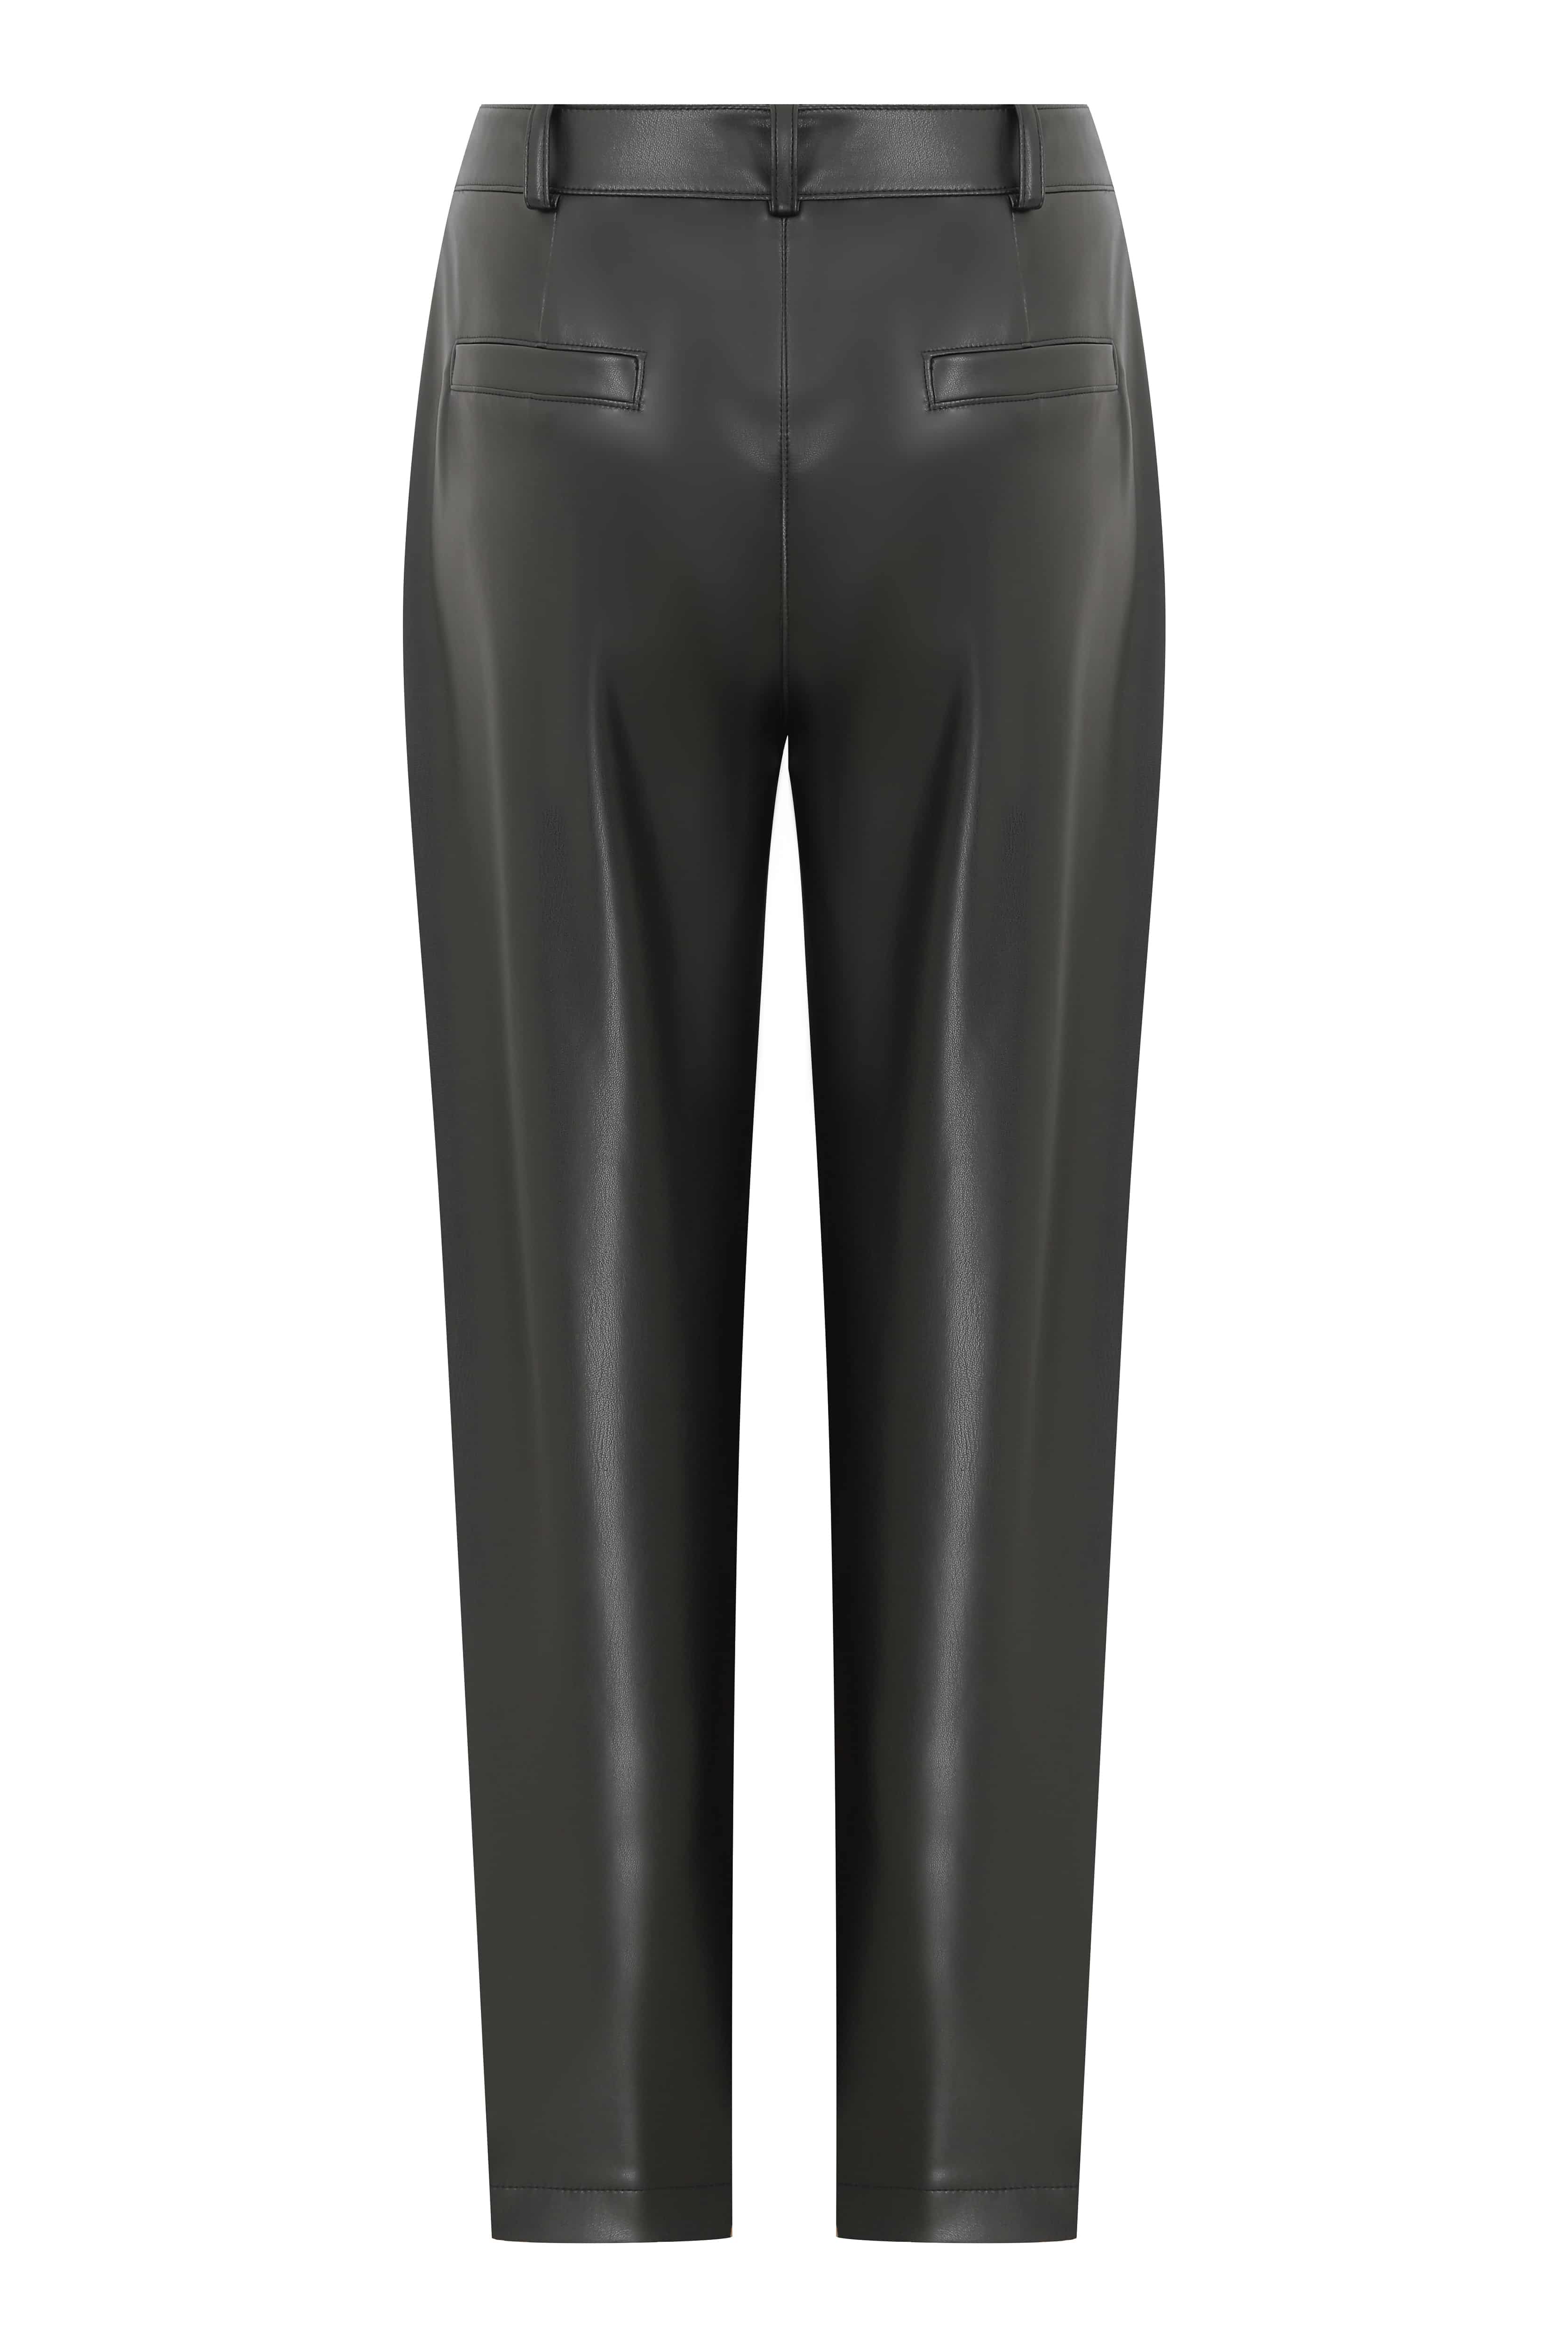 Leather Look Women's Trousers ---[BLACK]